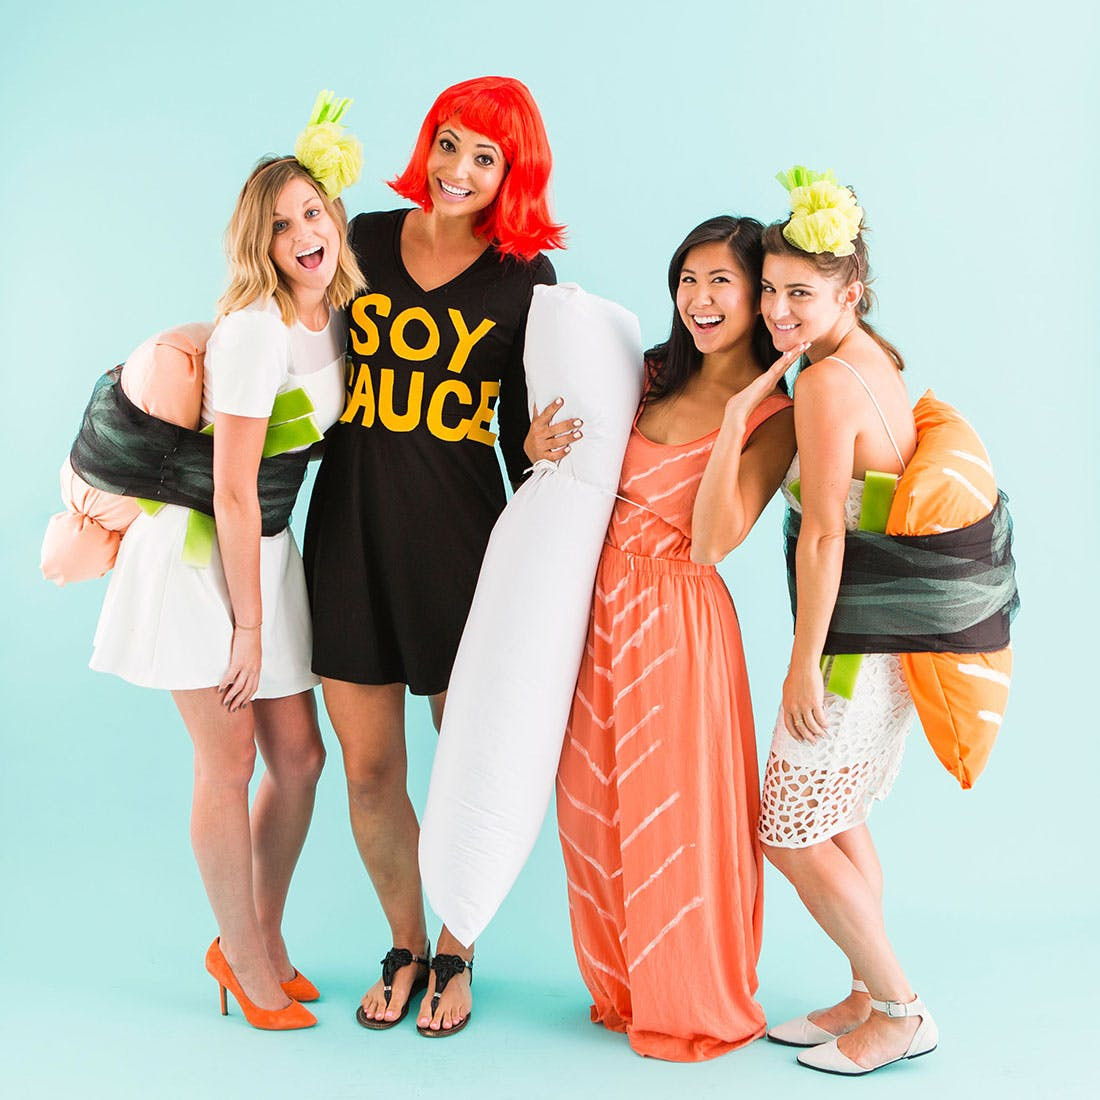 DIY Group Halloween Costume
 Dress Up like Sushi for the Best Group Halloween Costume